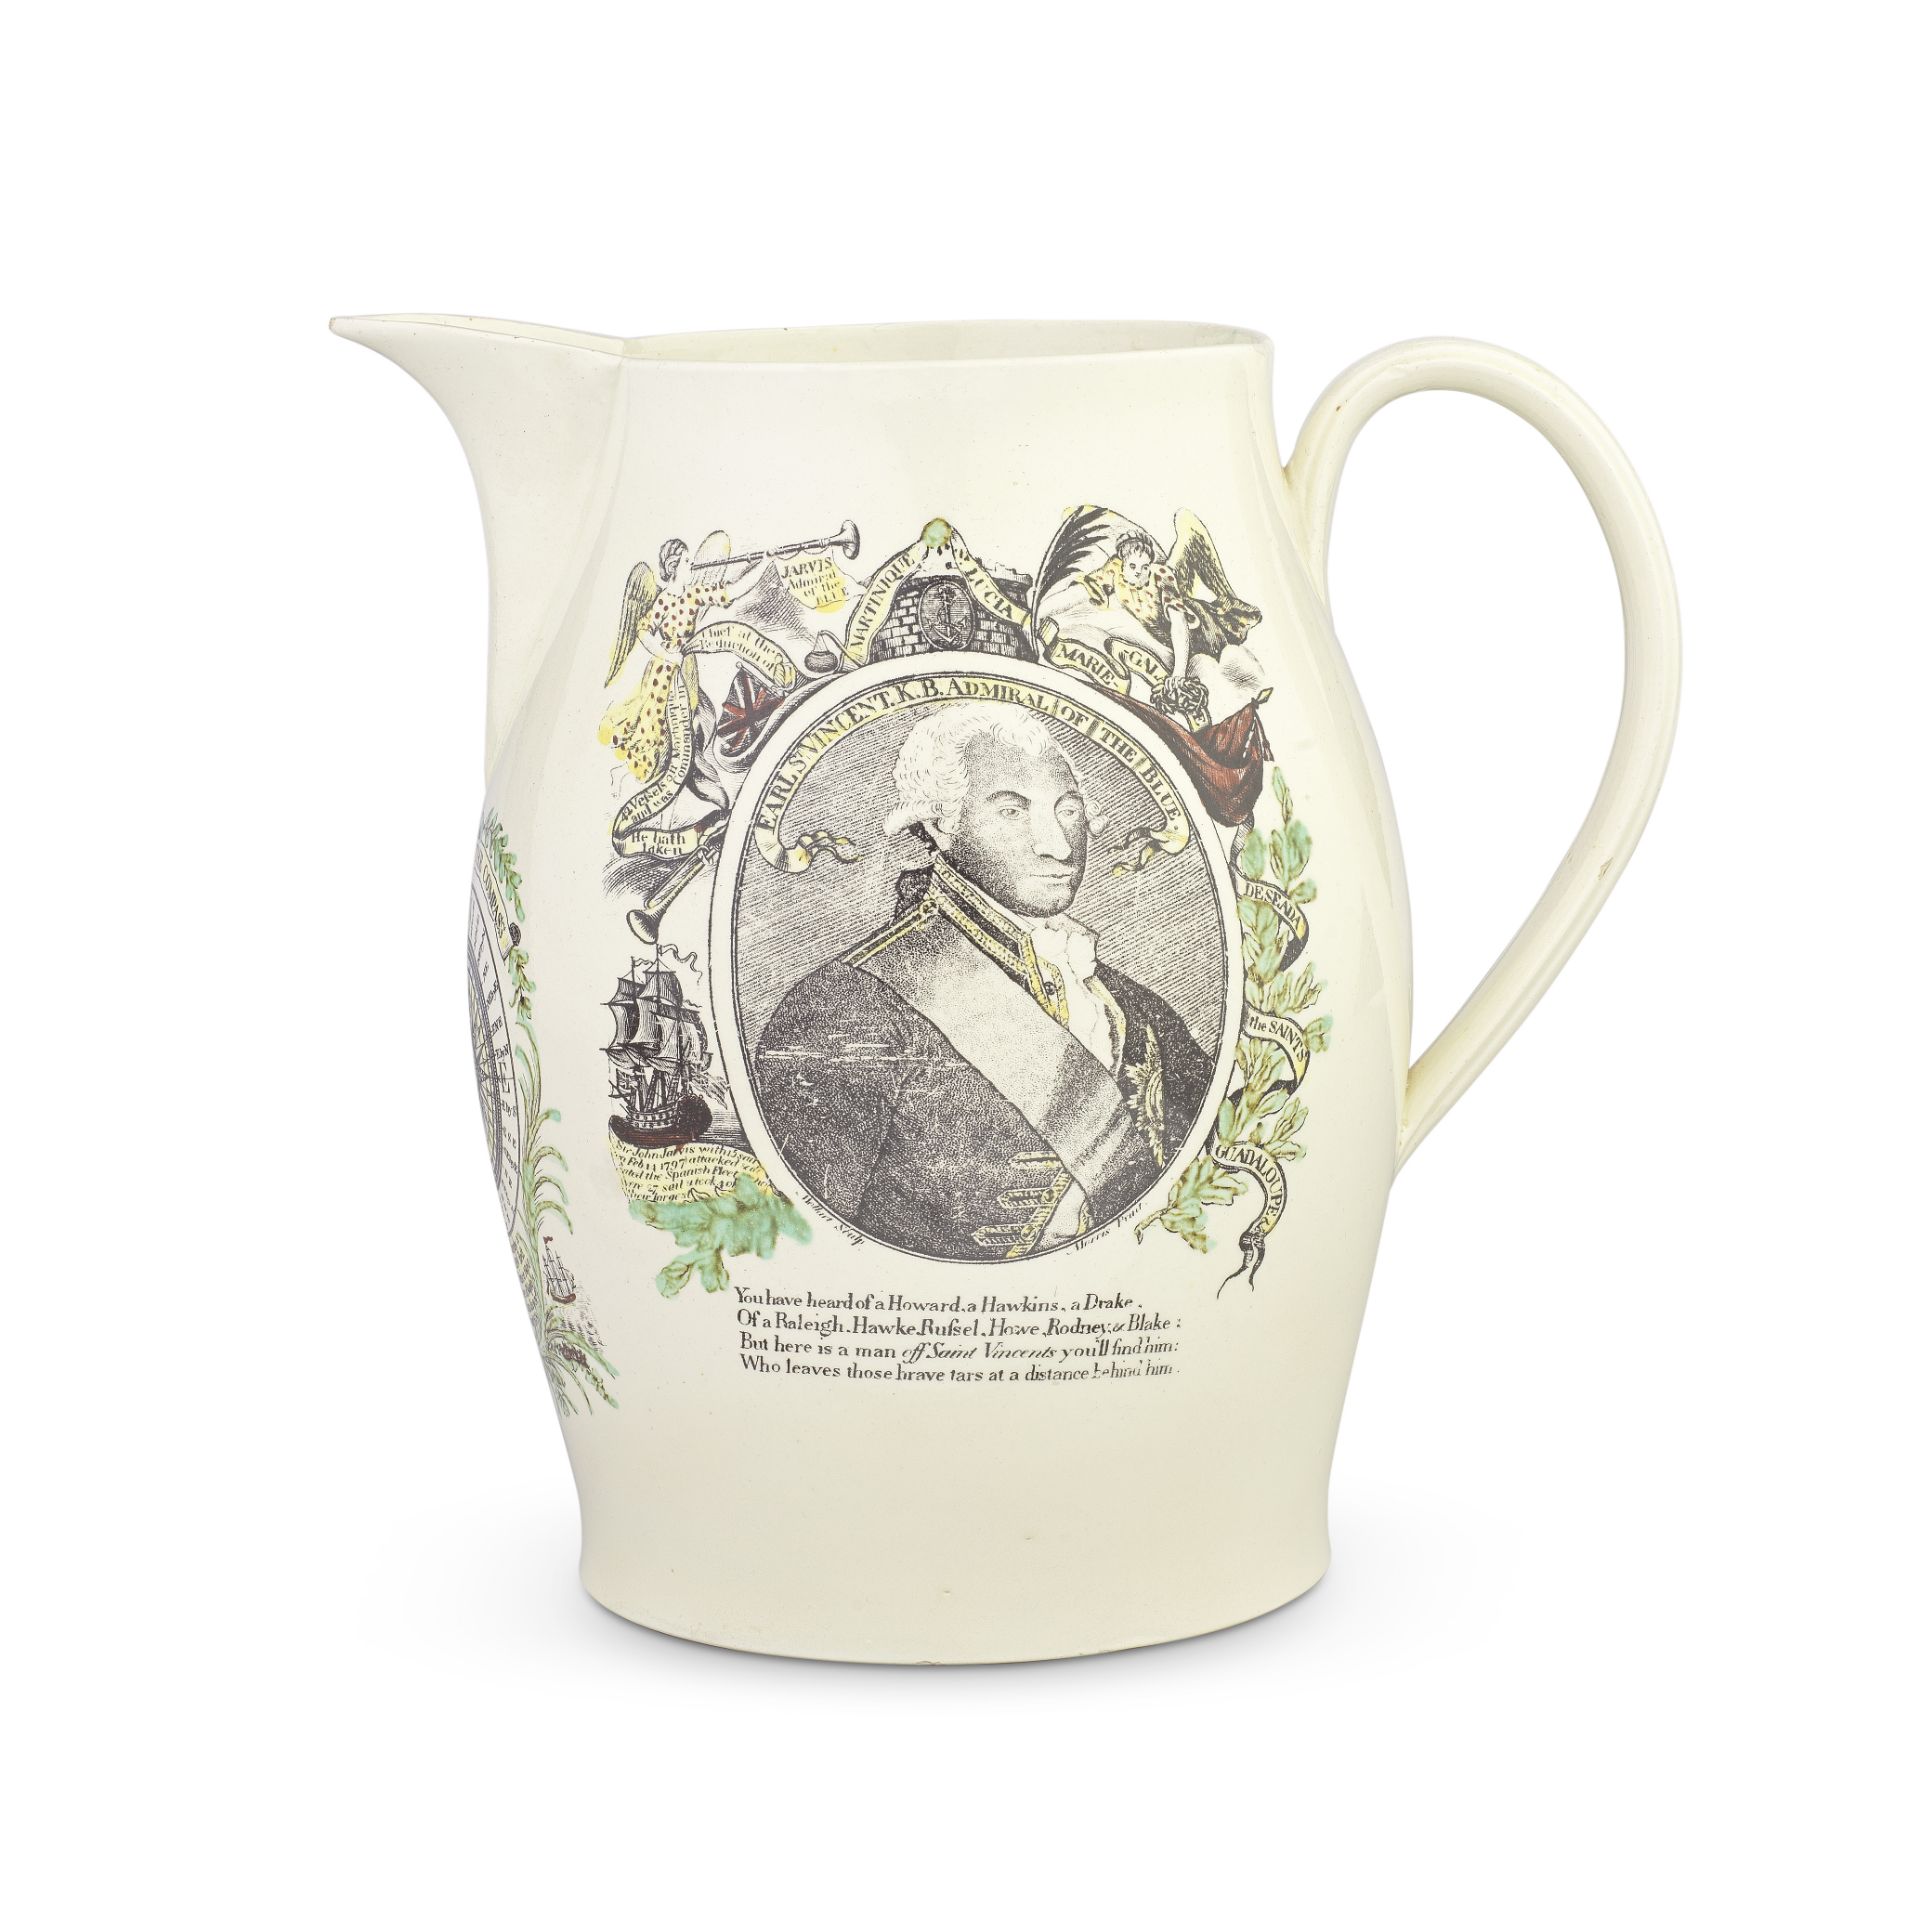 A large creamware jug, circa 1800